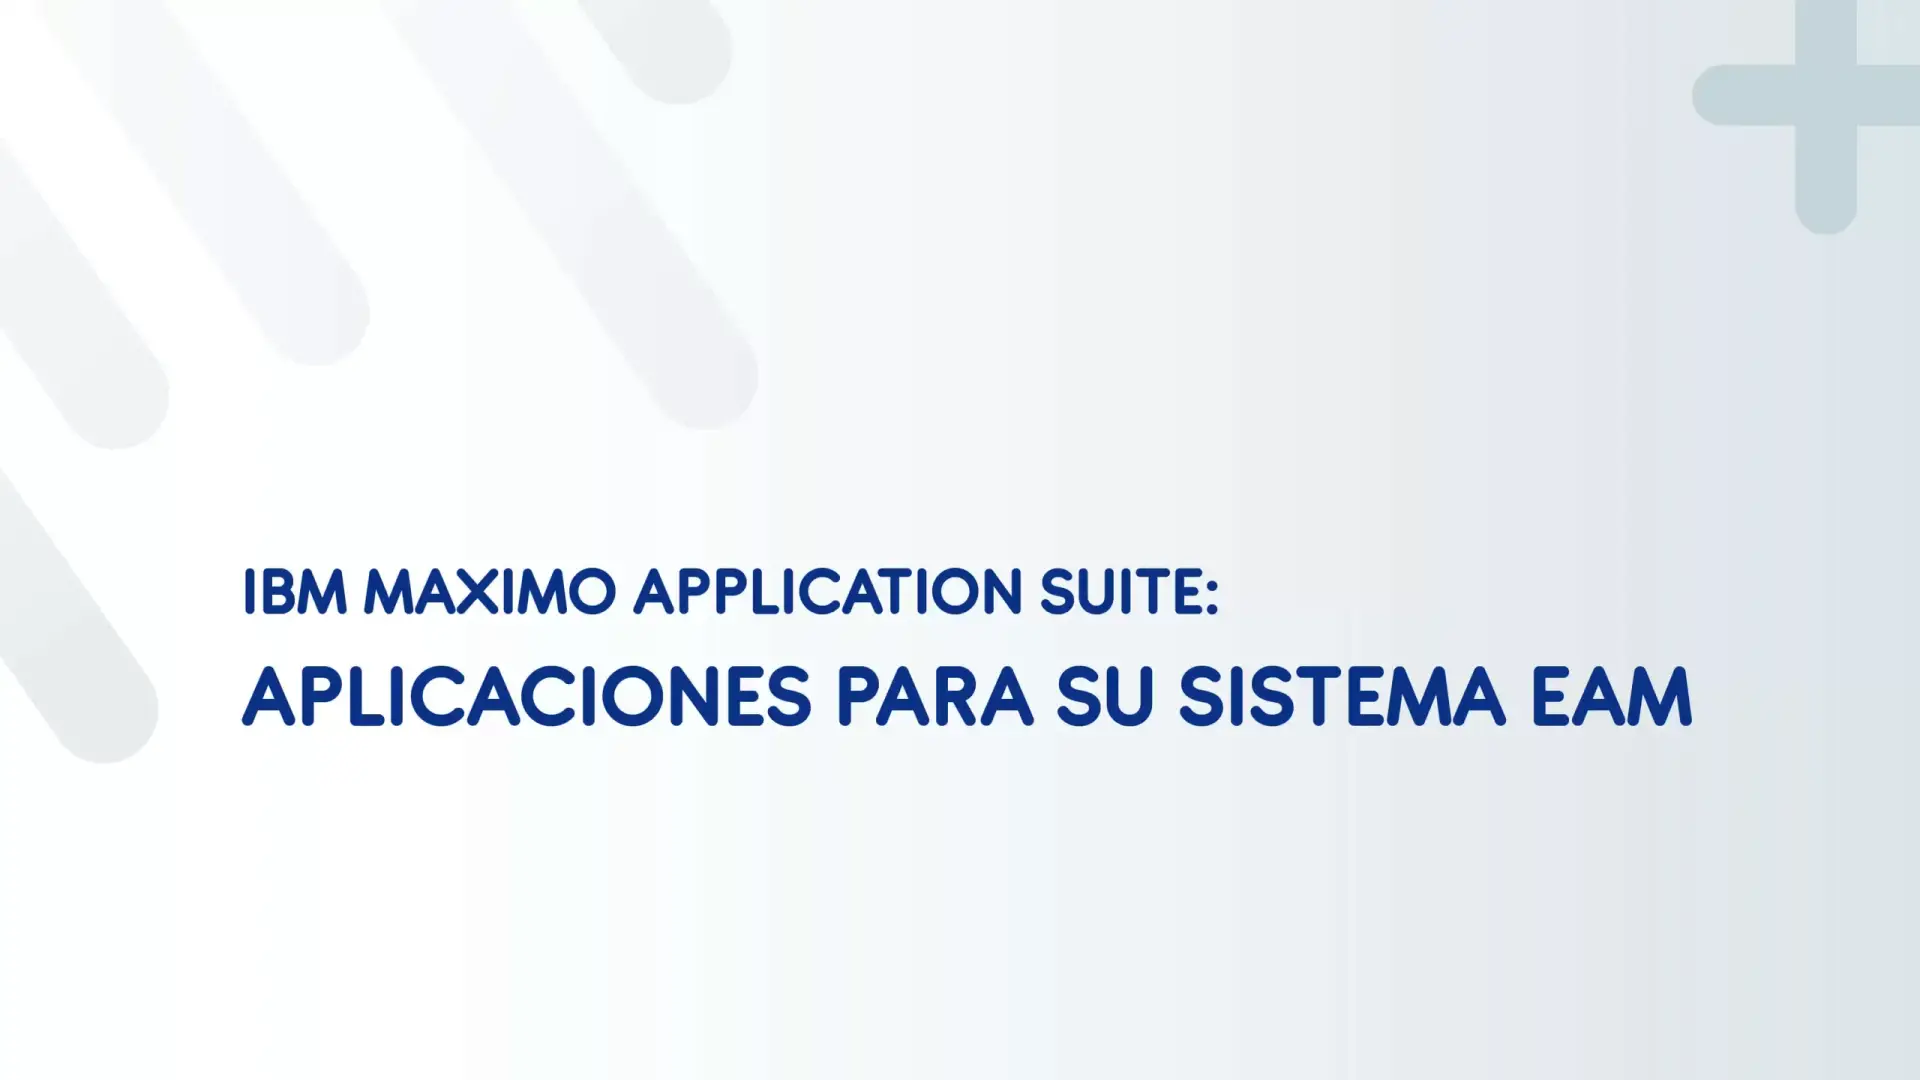 ibm maximo application suite sistema eam